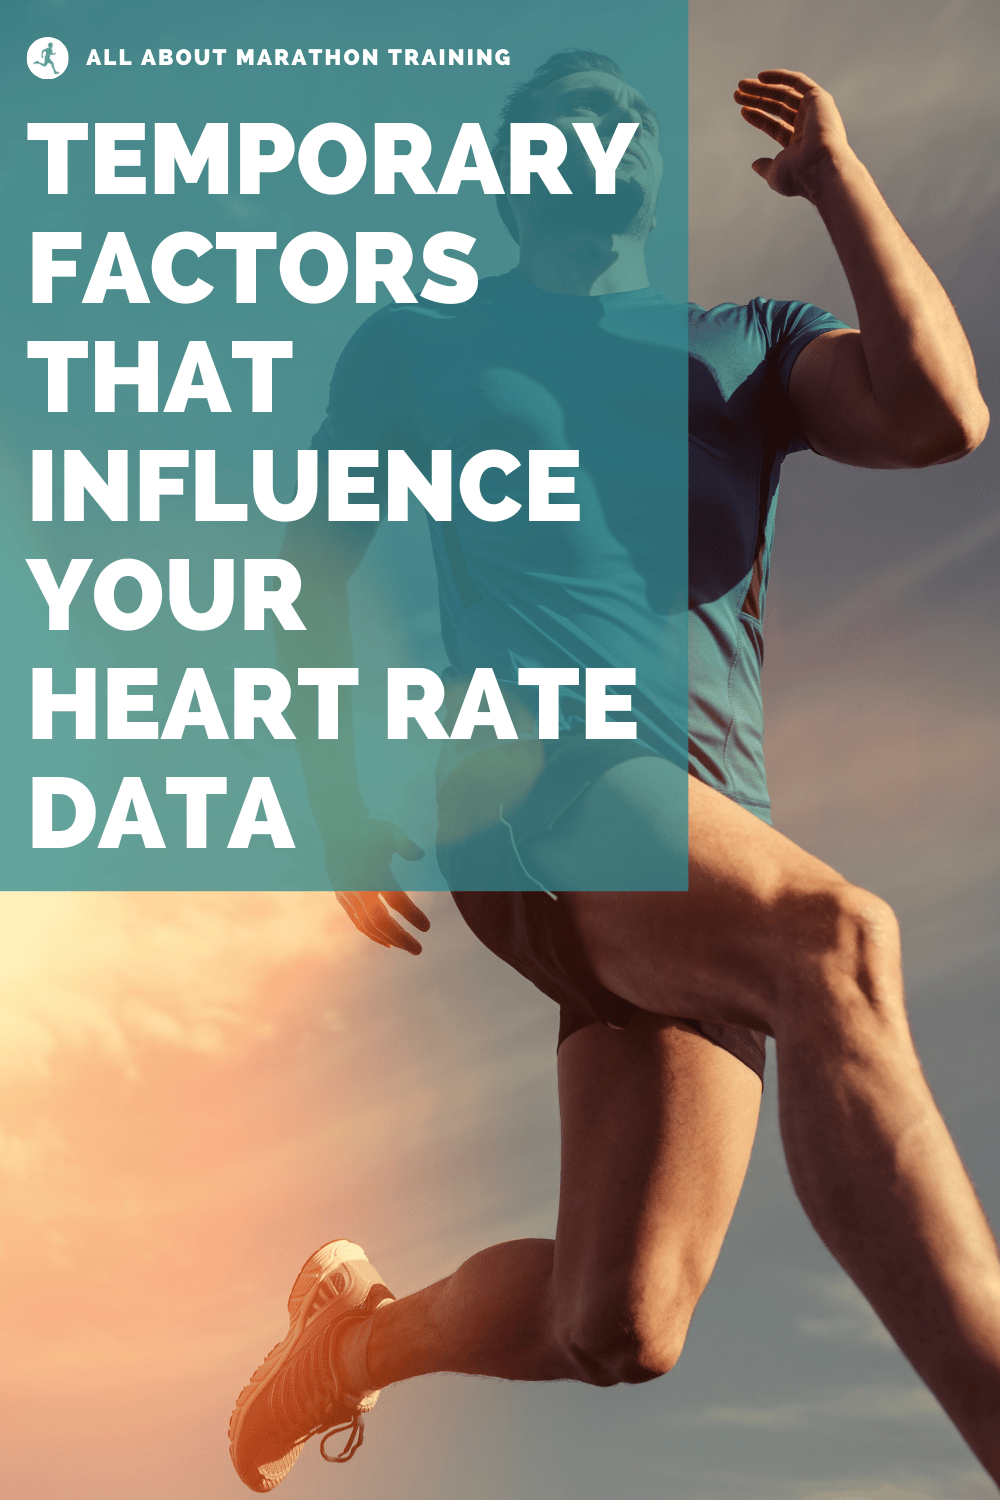 Marathon Training Heart Rate Zone Temporary Factors